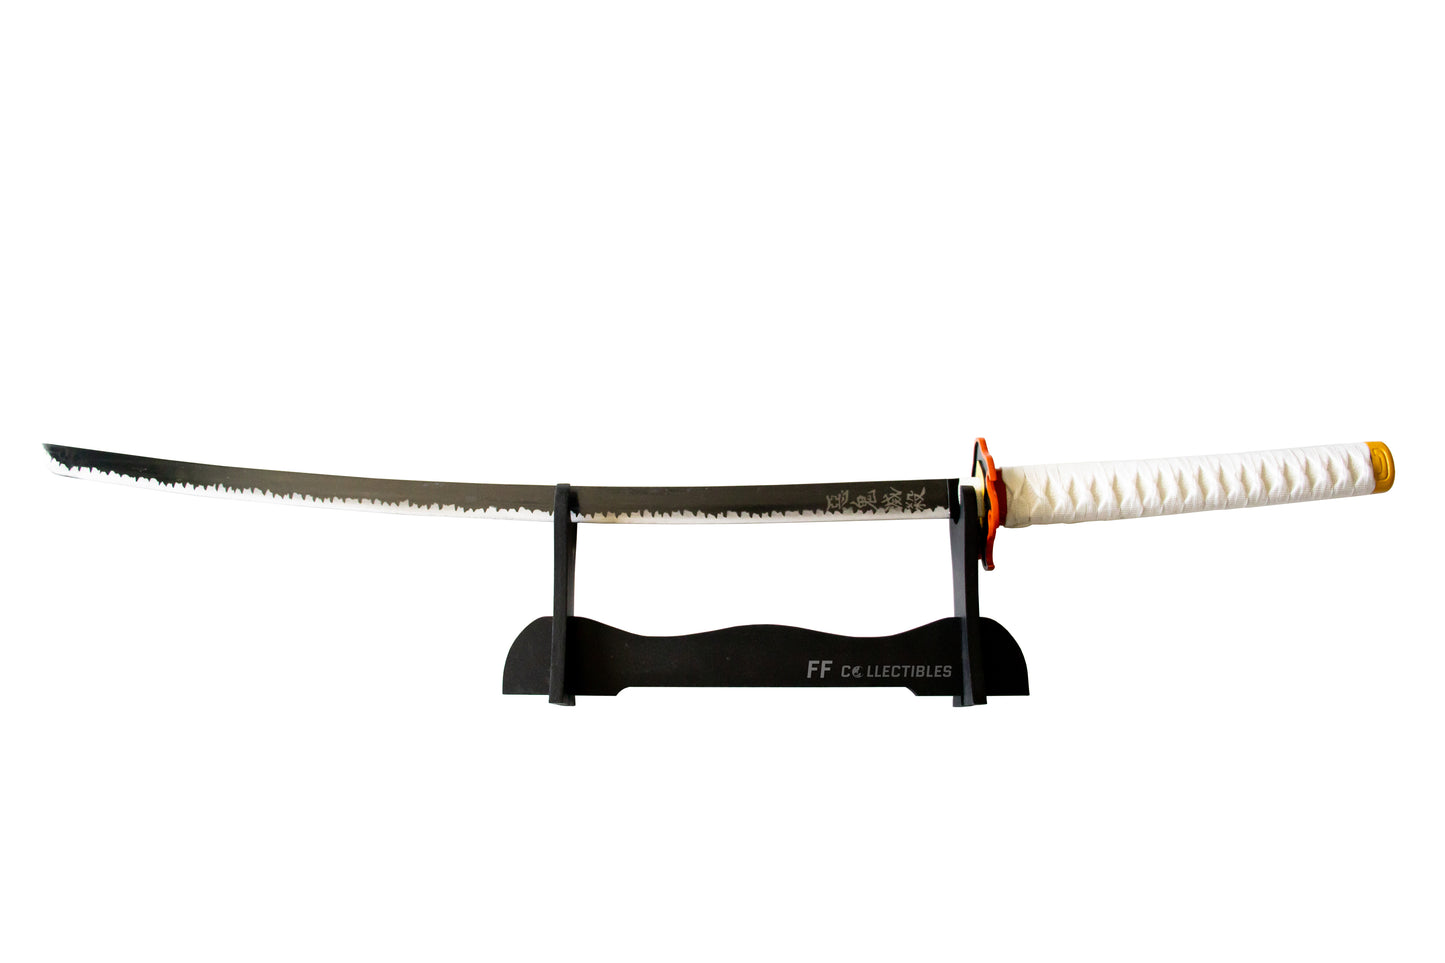 DEMON SLAYER - KYOJURO RENGOKU'S NICHIRIN SWORD (w FREE sword stand)